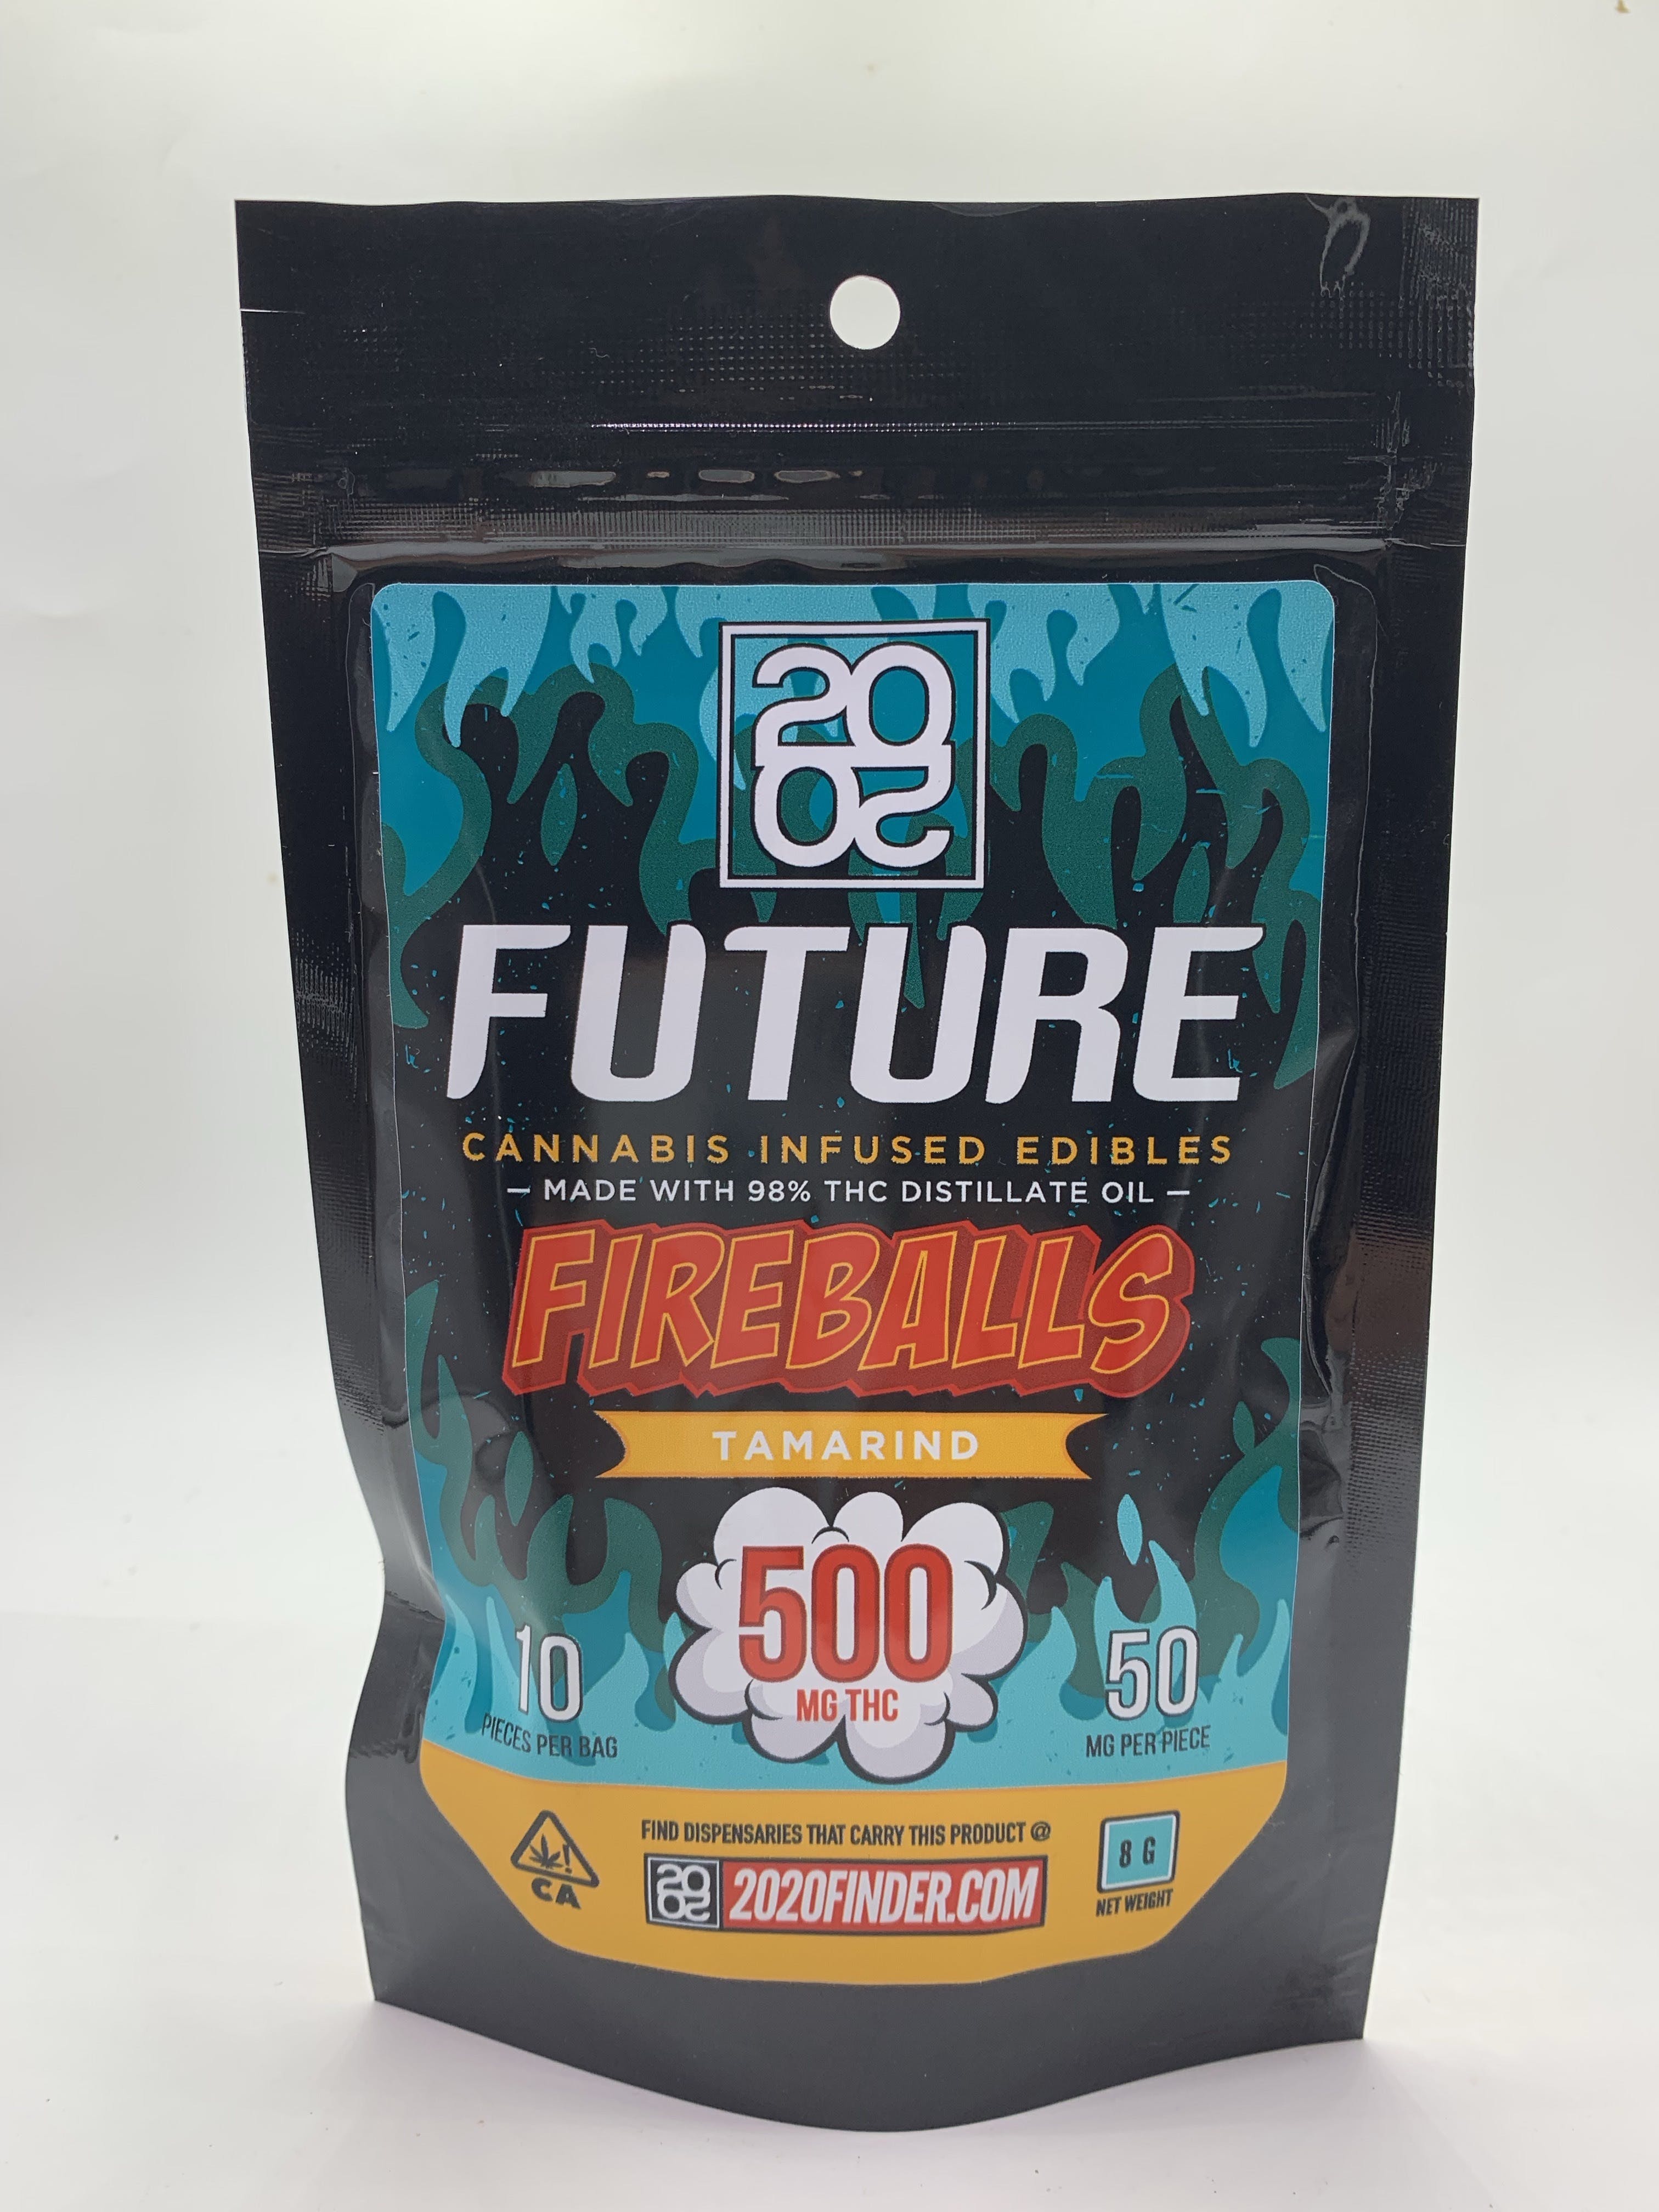 edible-2020-fireballs-tamarind-500mg